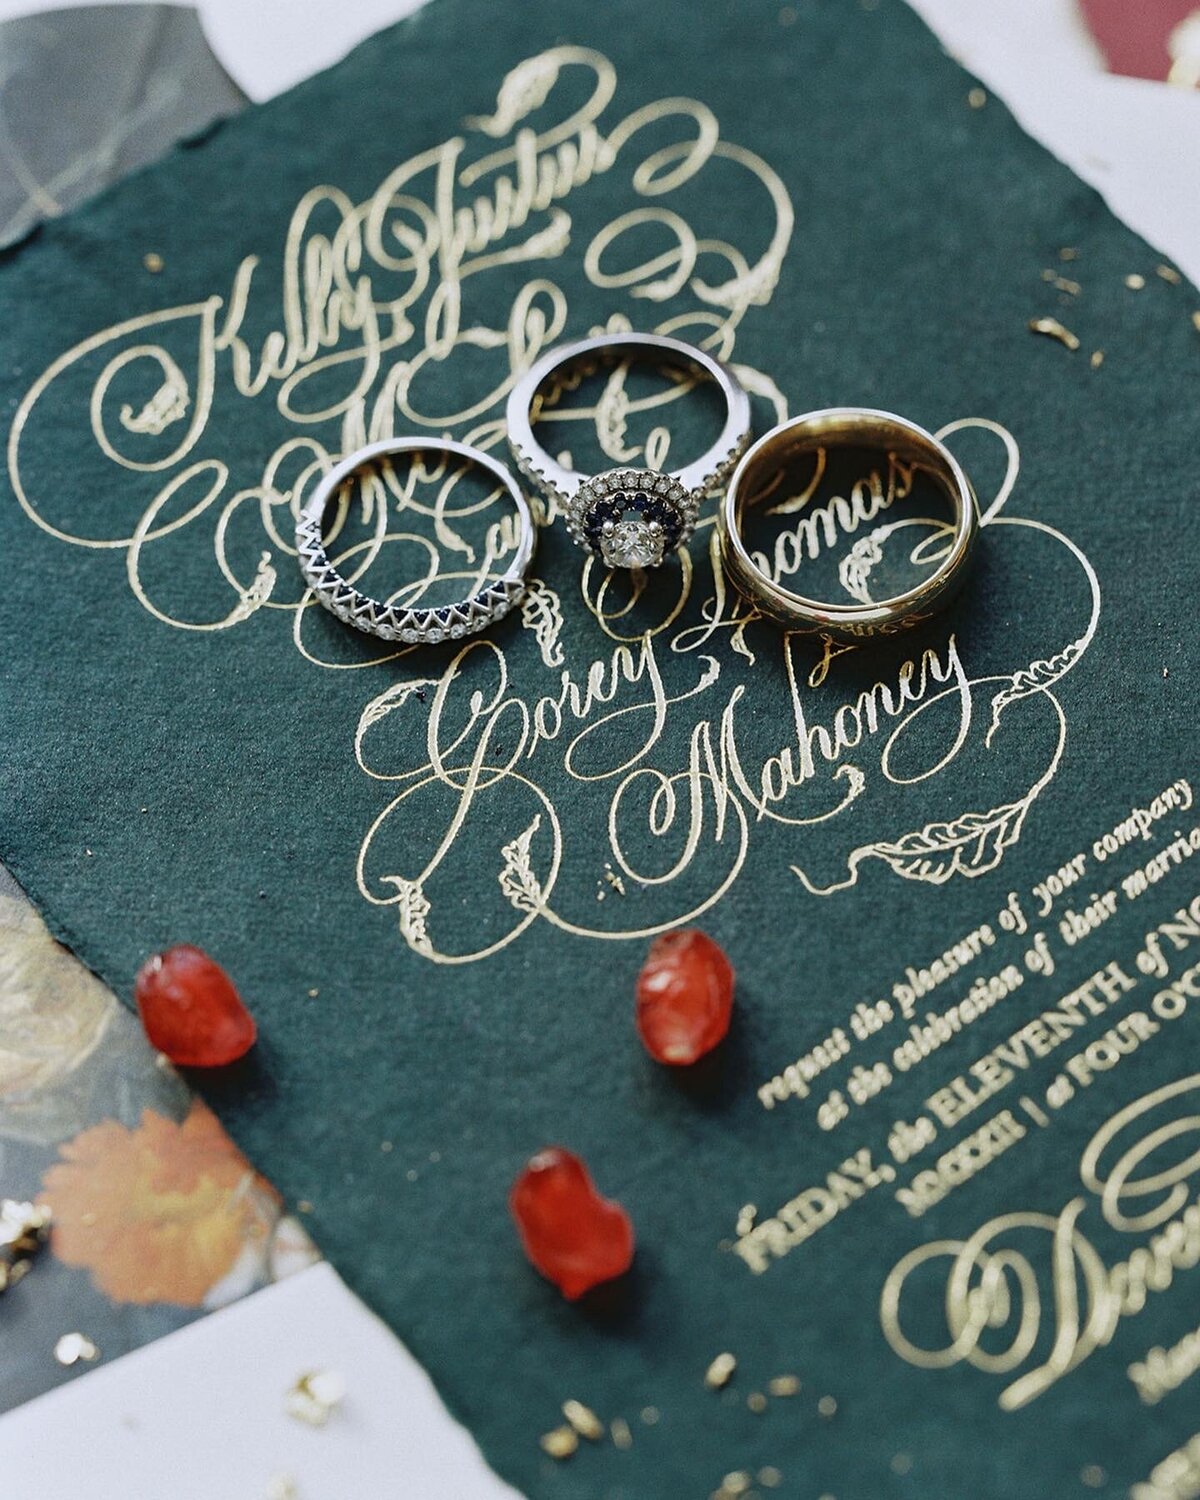 Green wedding invitation with custom calligraphy